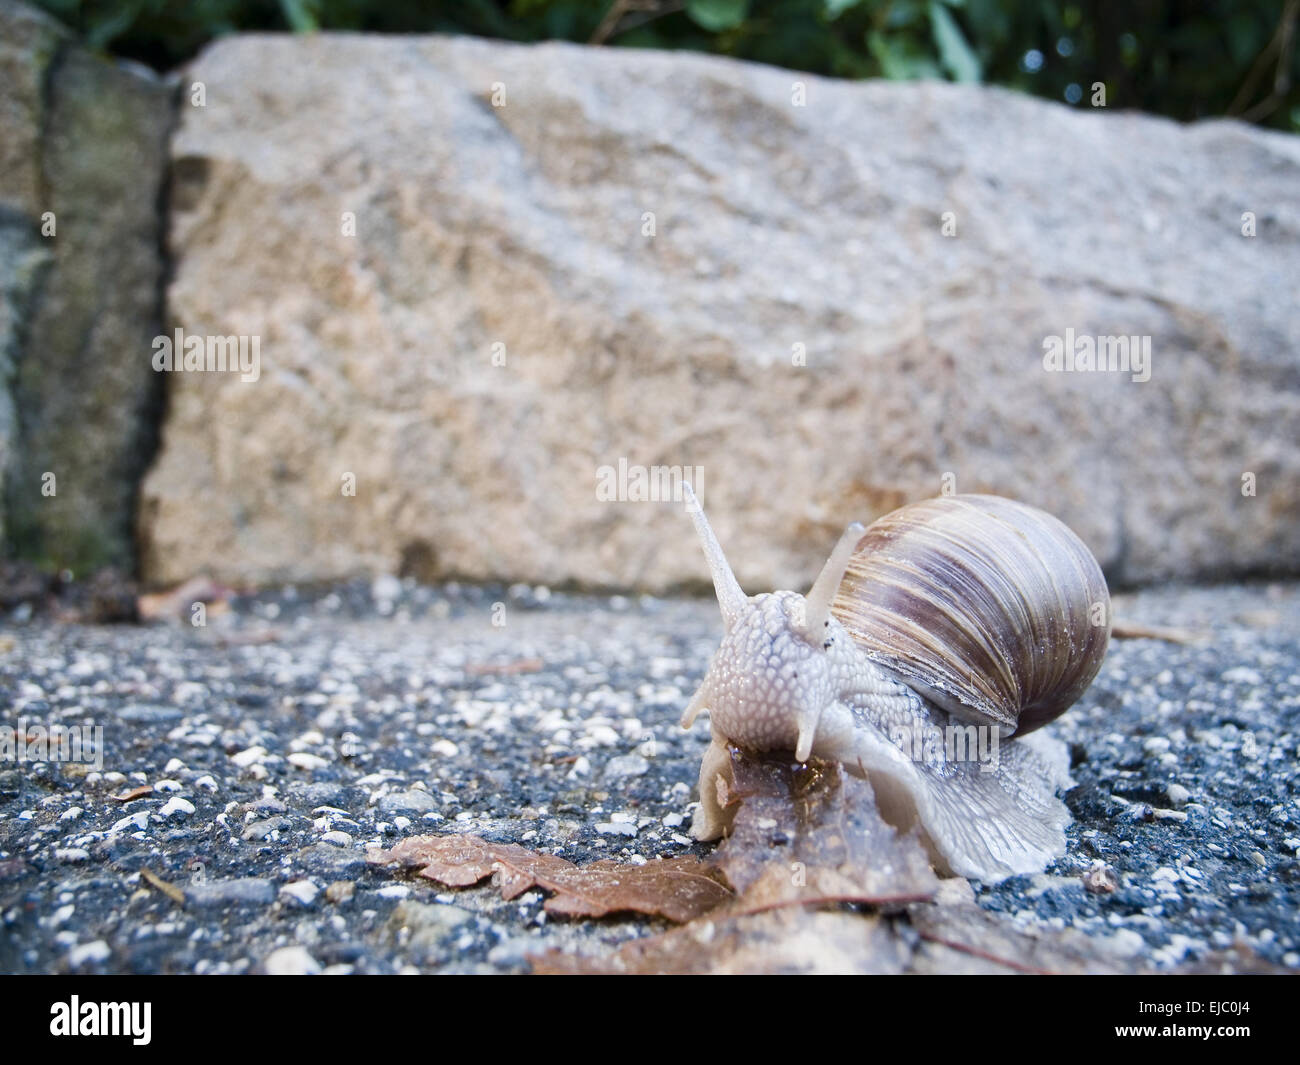 Snail on the ground Stock Photo